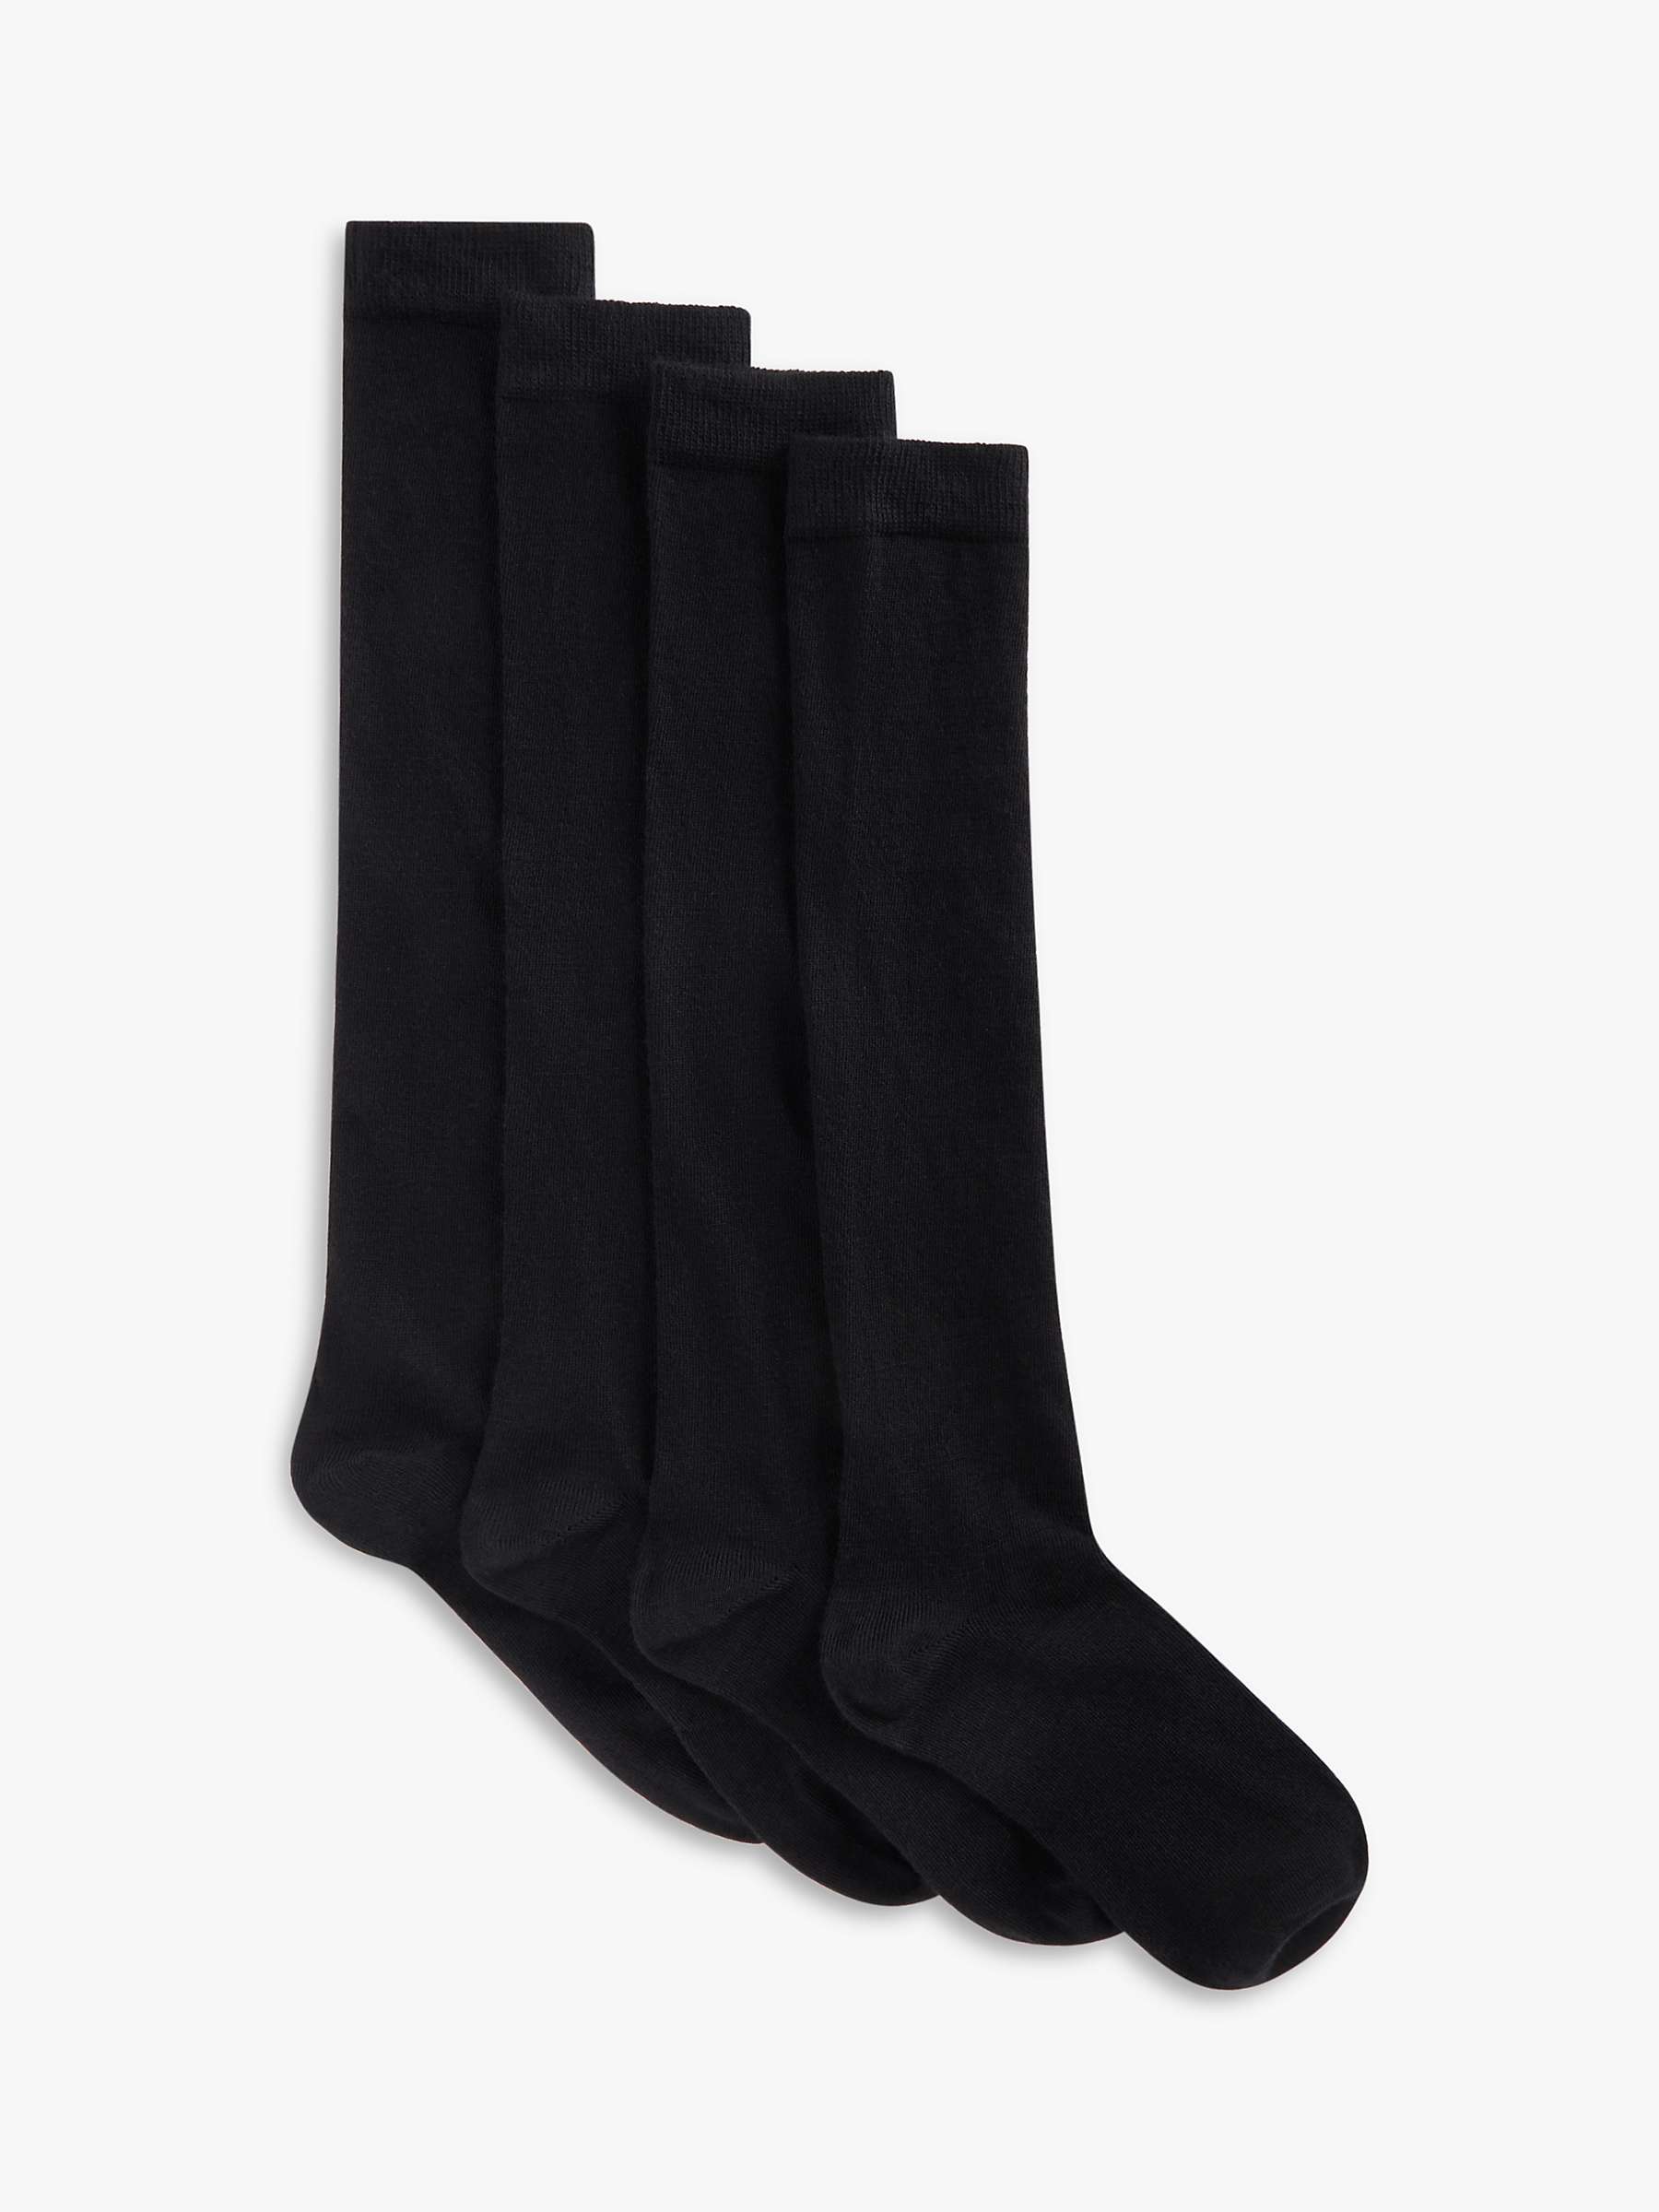 Buy John Lewis Merino Wool Mix Knee High Socks Online at johnlewis.com